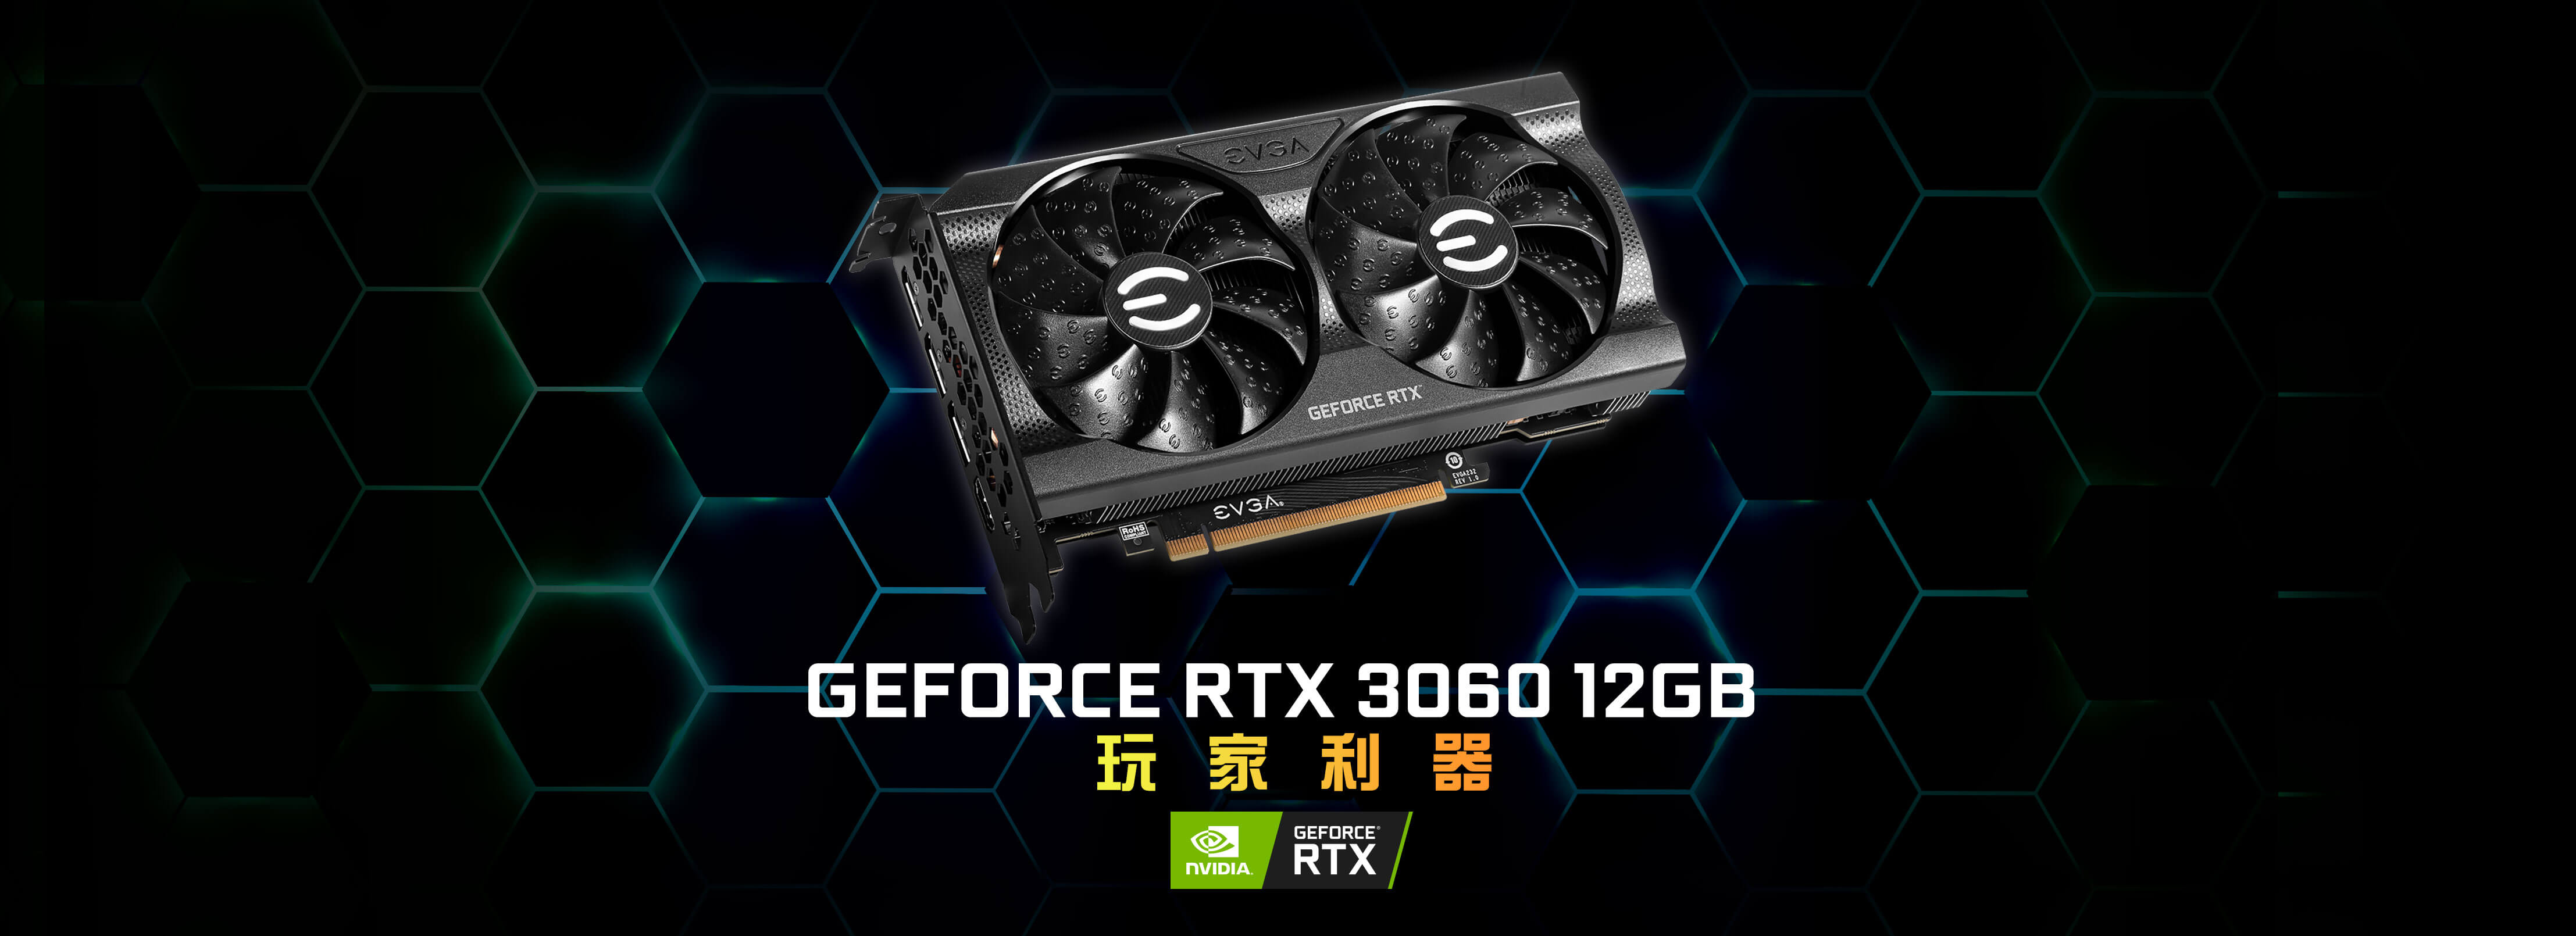 EVGA GeForce RTX 3060 12GB